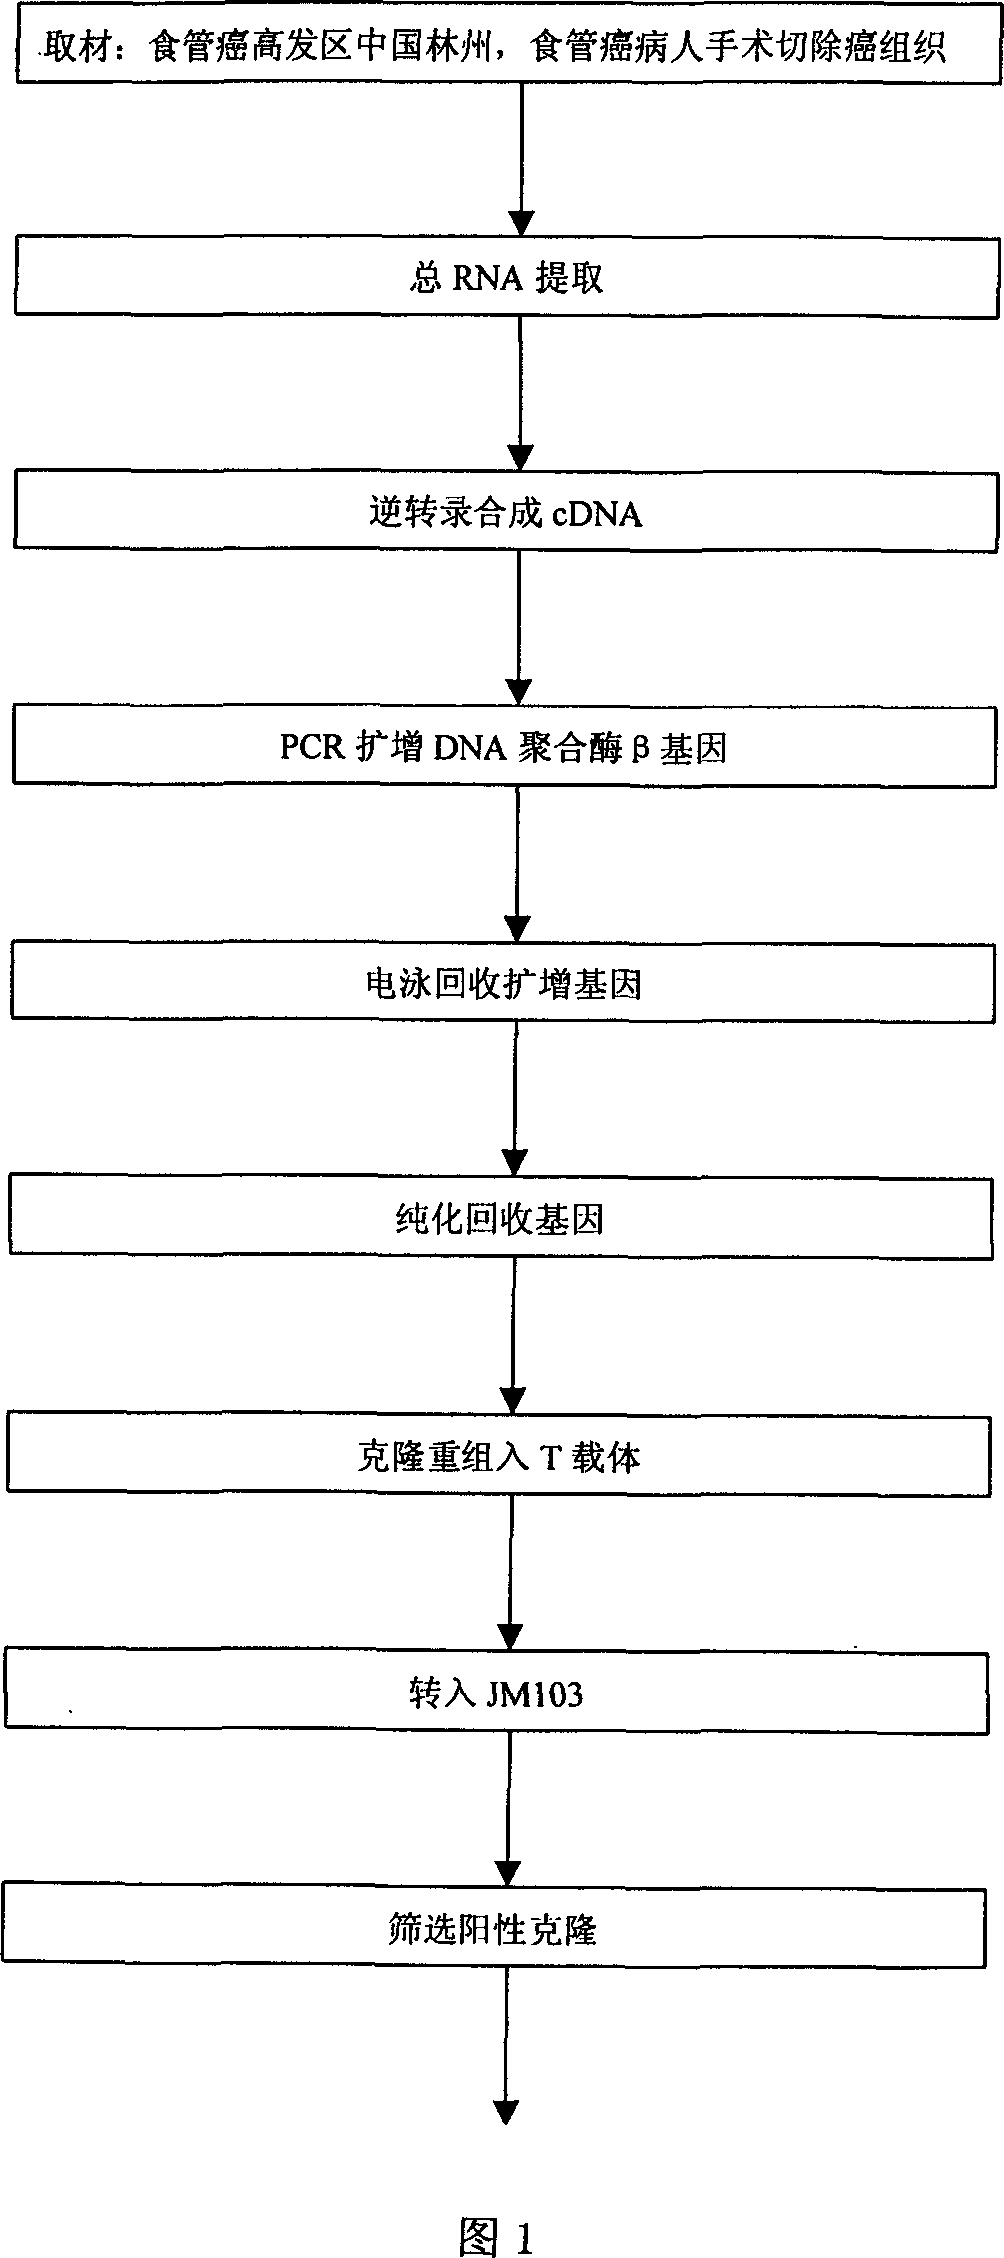 Human DNA polymerase beta mutant gene and its corresponding protein